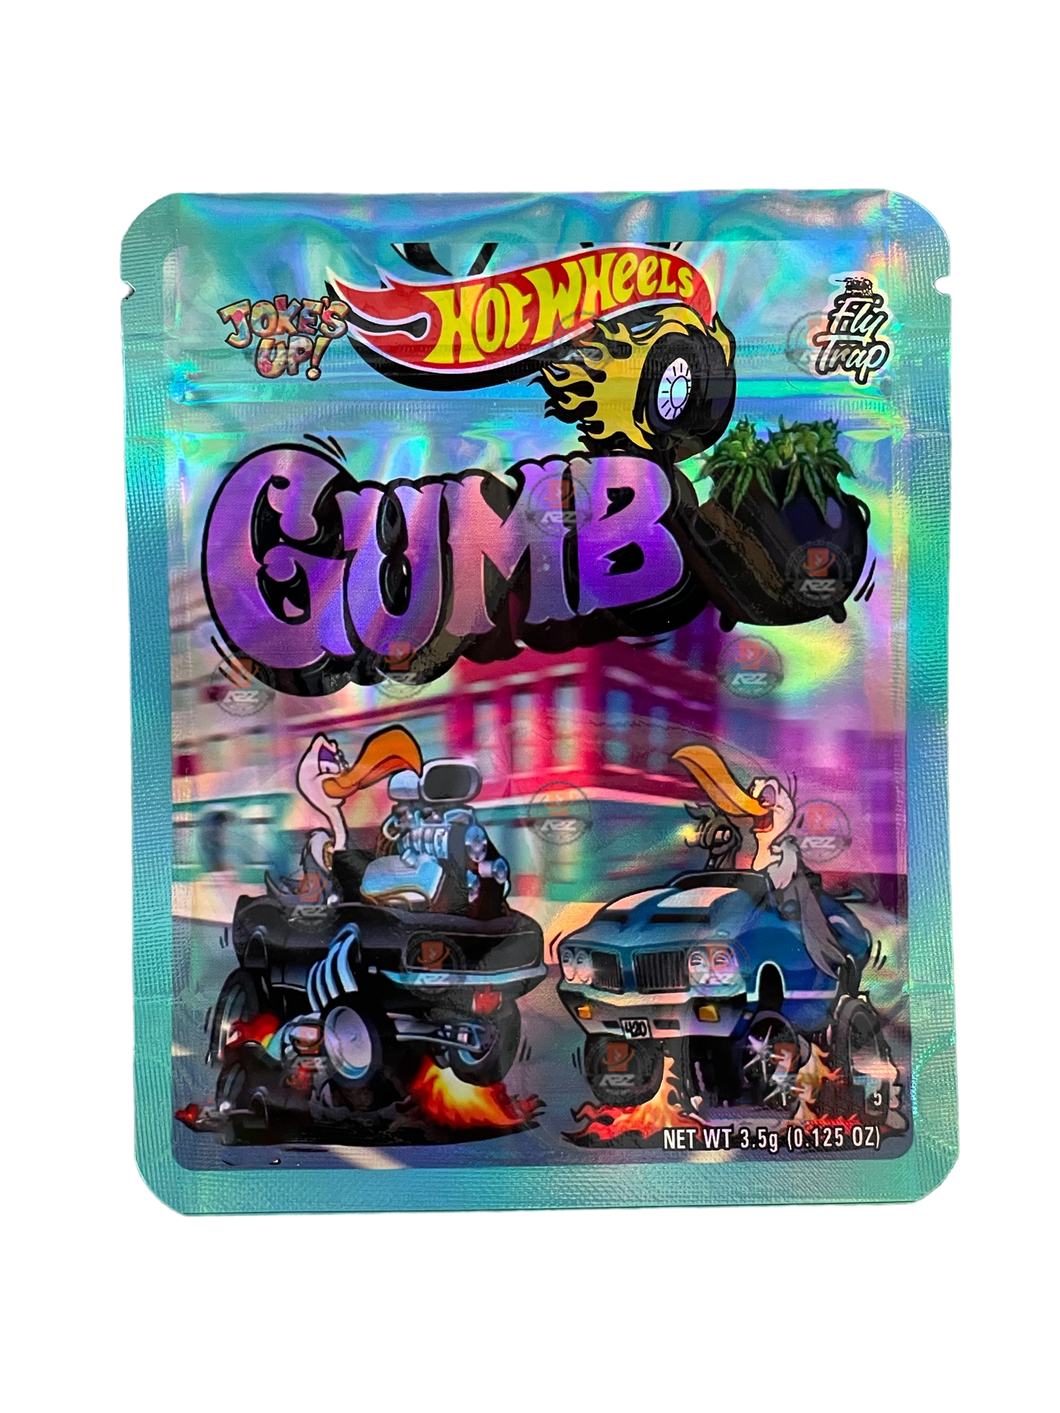 Hot wheels Gumbo 3.5g Mylar Bag Holographic Jokes UP